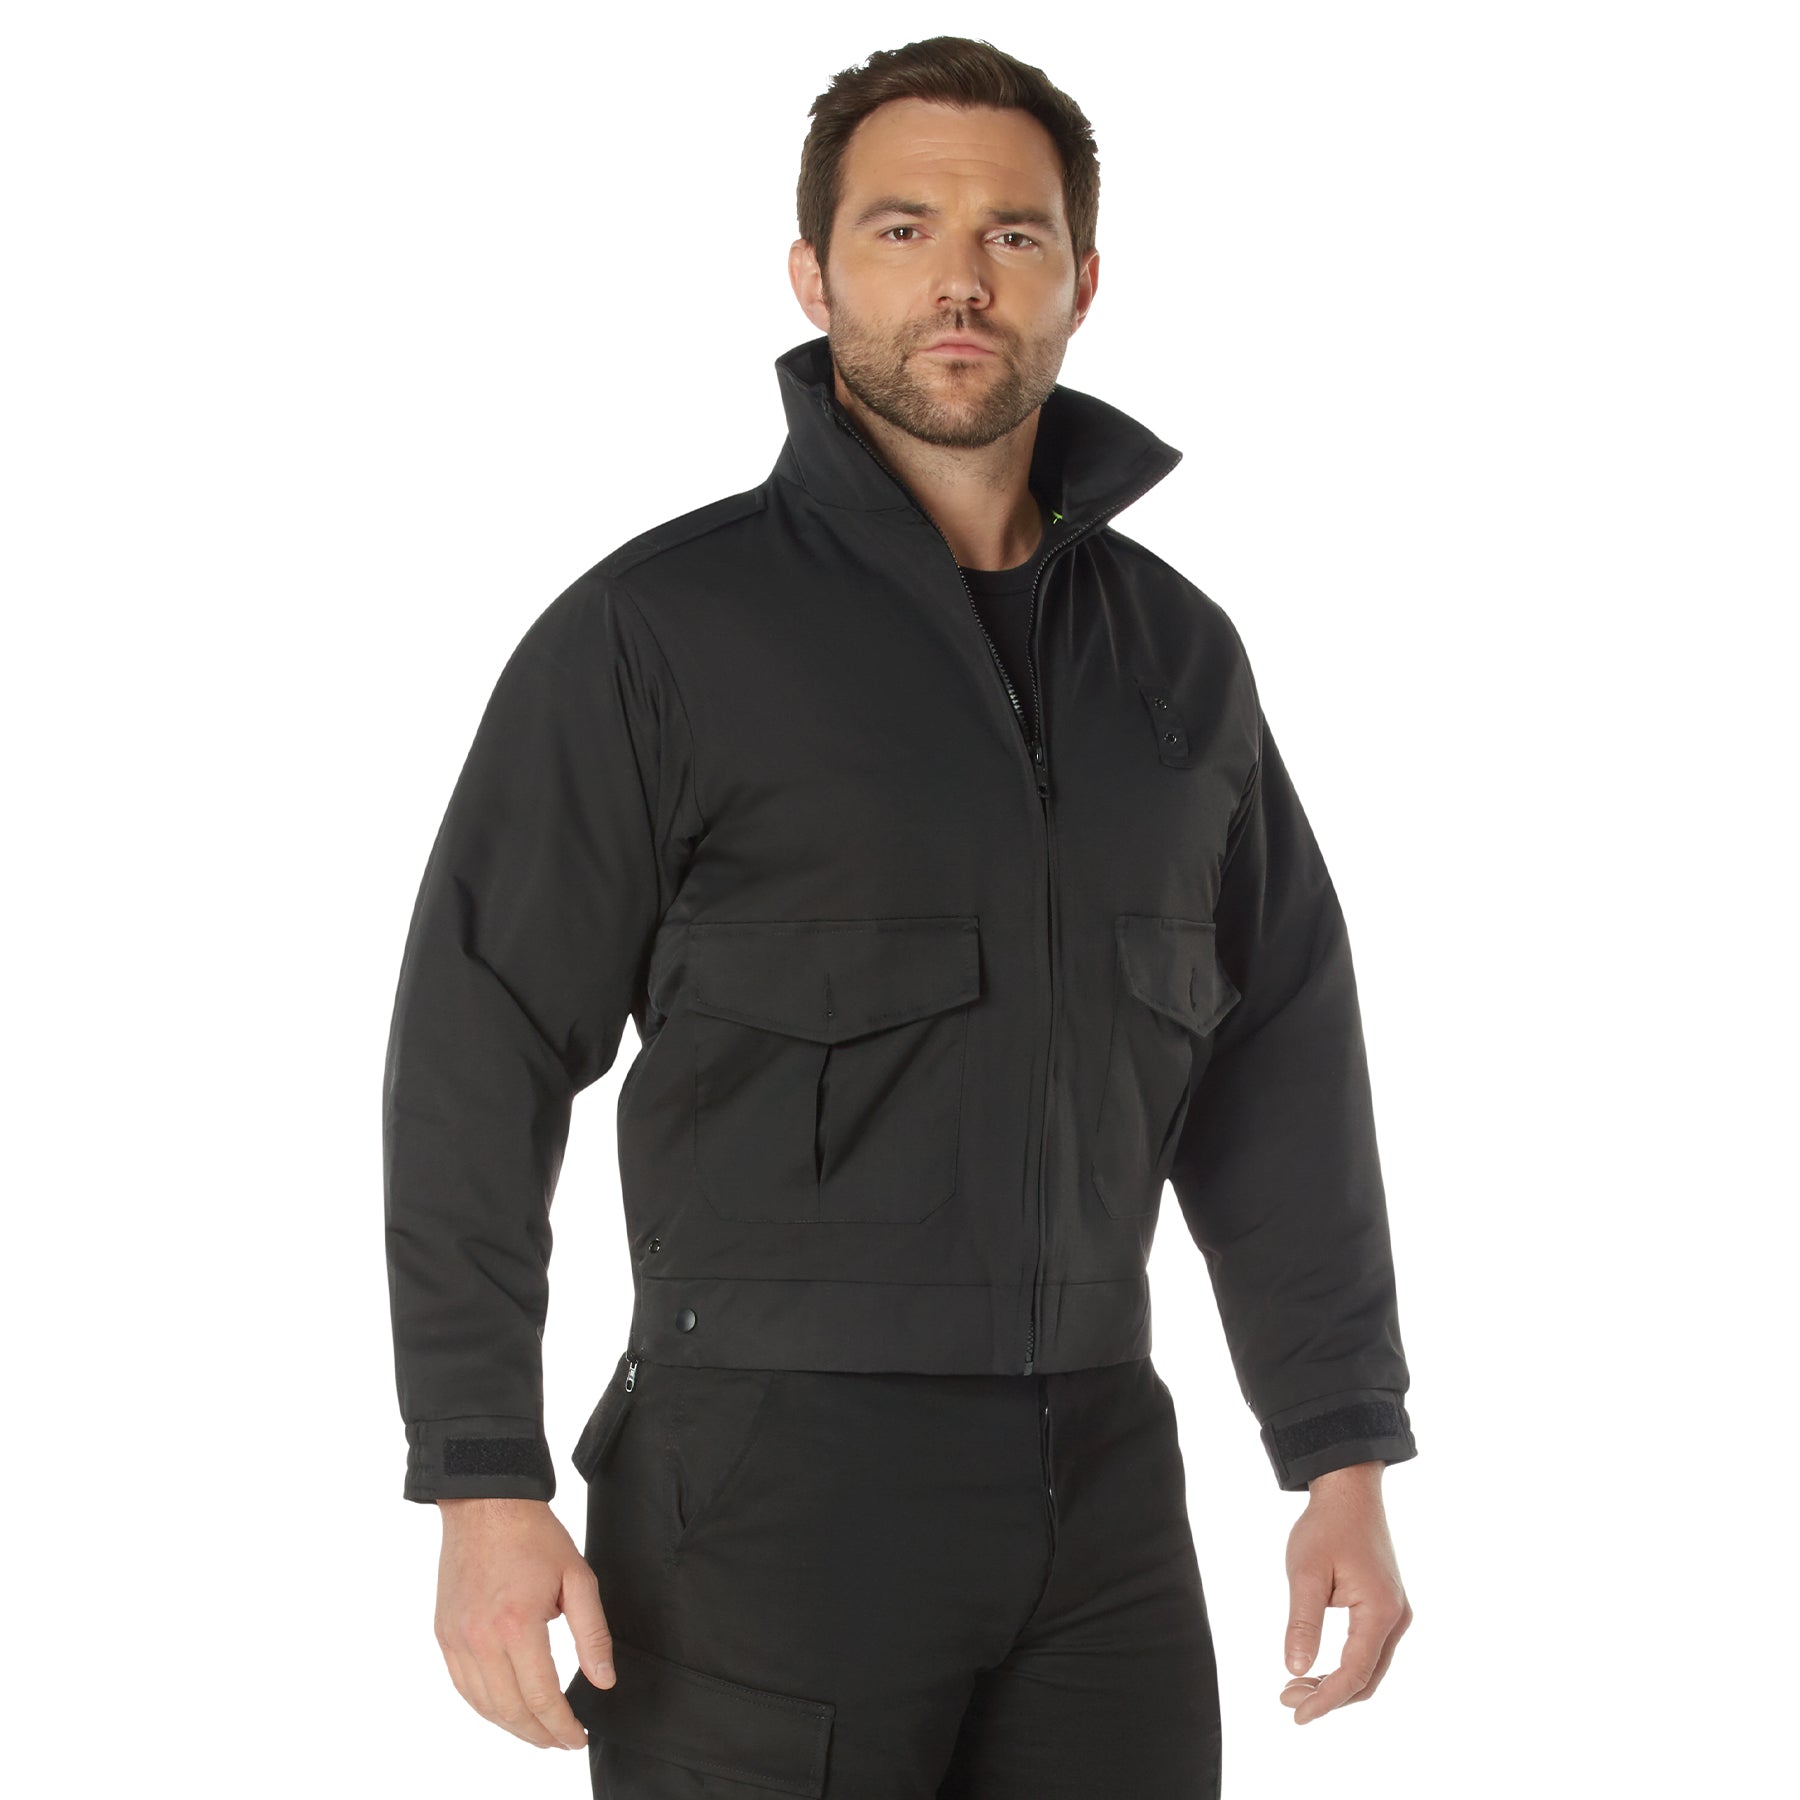 Rothco Reversible Hi-visibility Uniform Jacket - Tactical Choice Plus